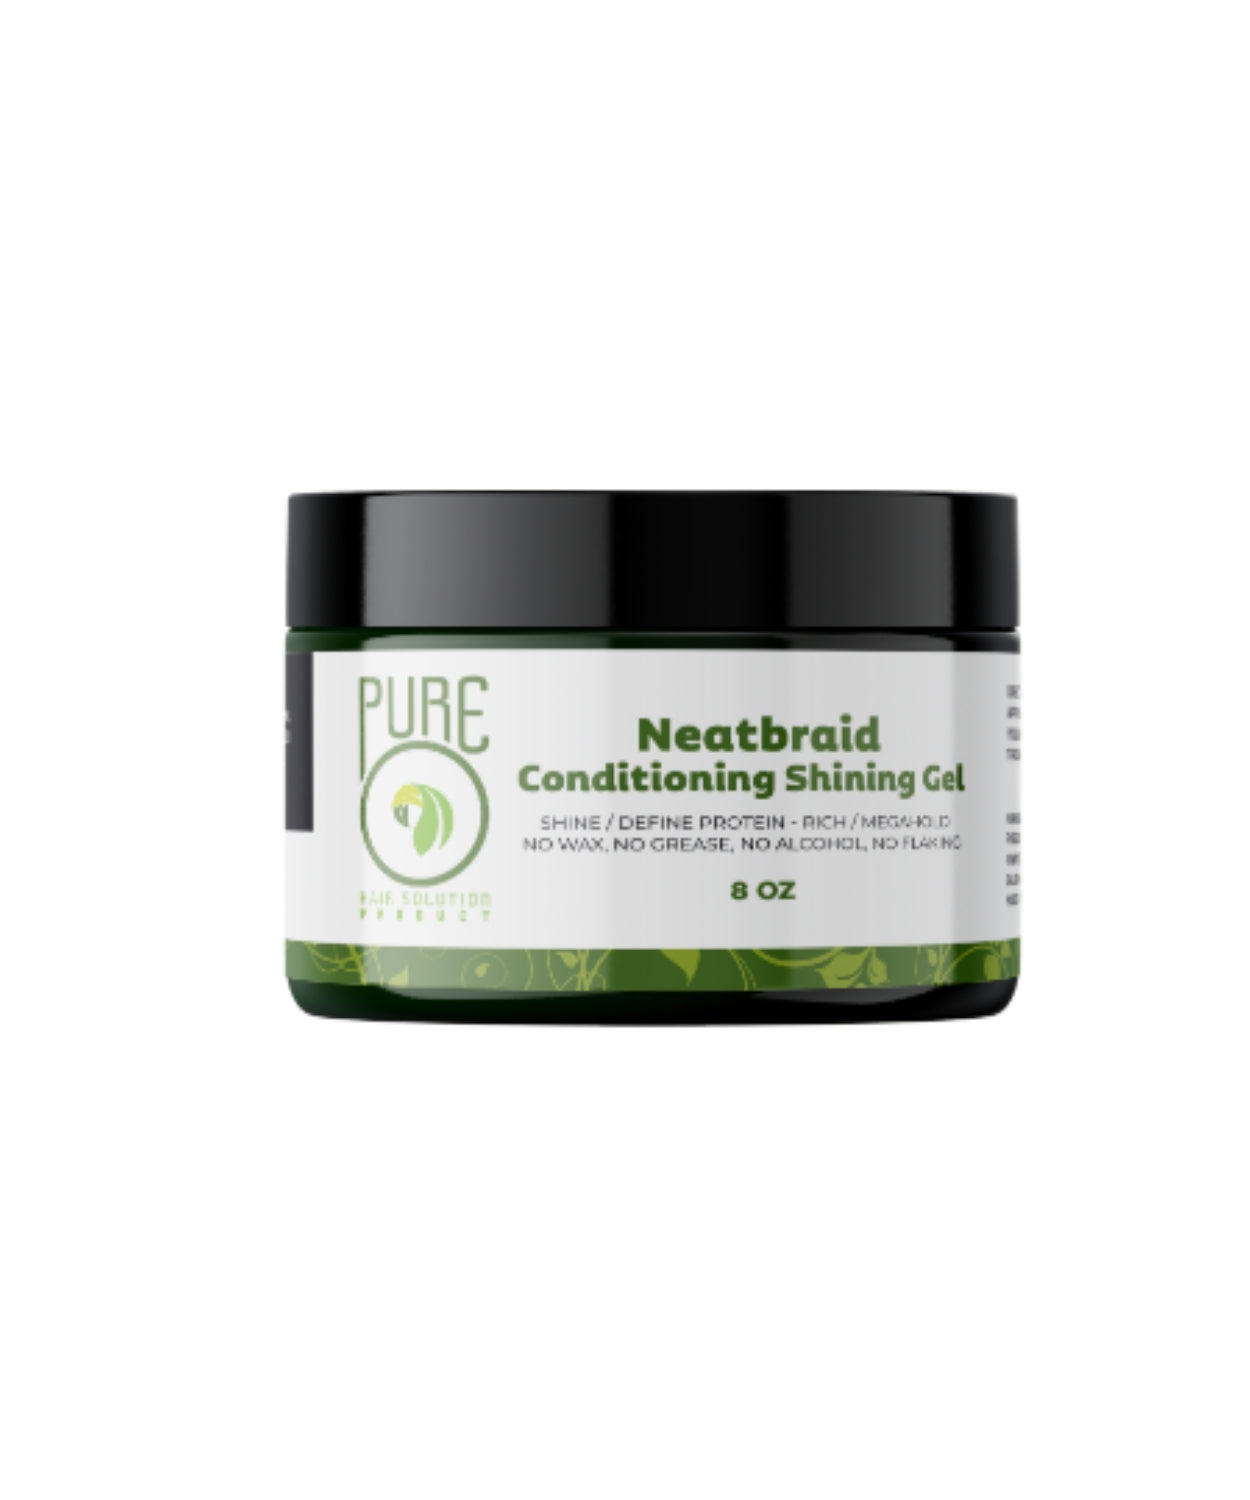 PURE-O NATURAL NEATBRAID CONDITIONING HAIR GEL